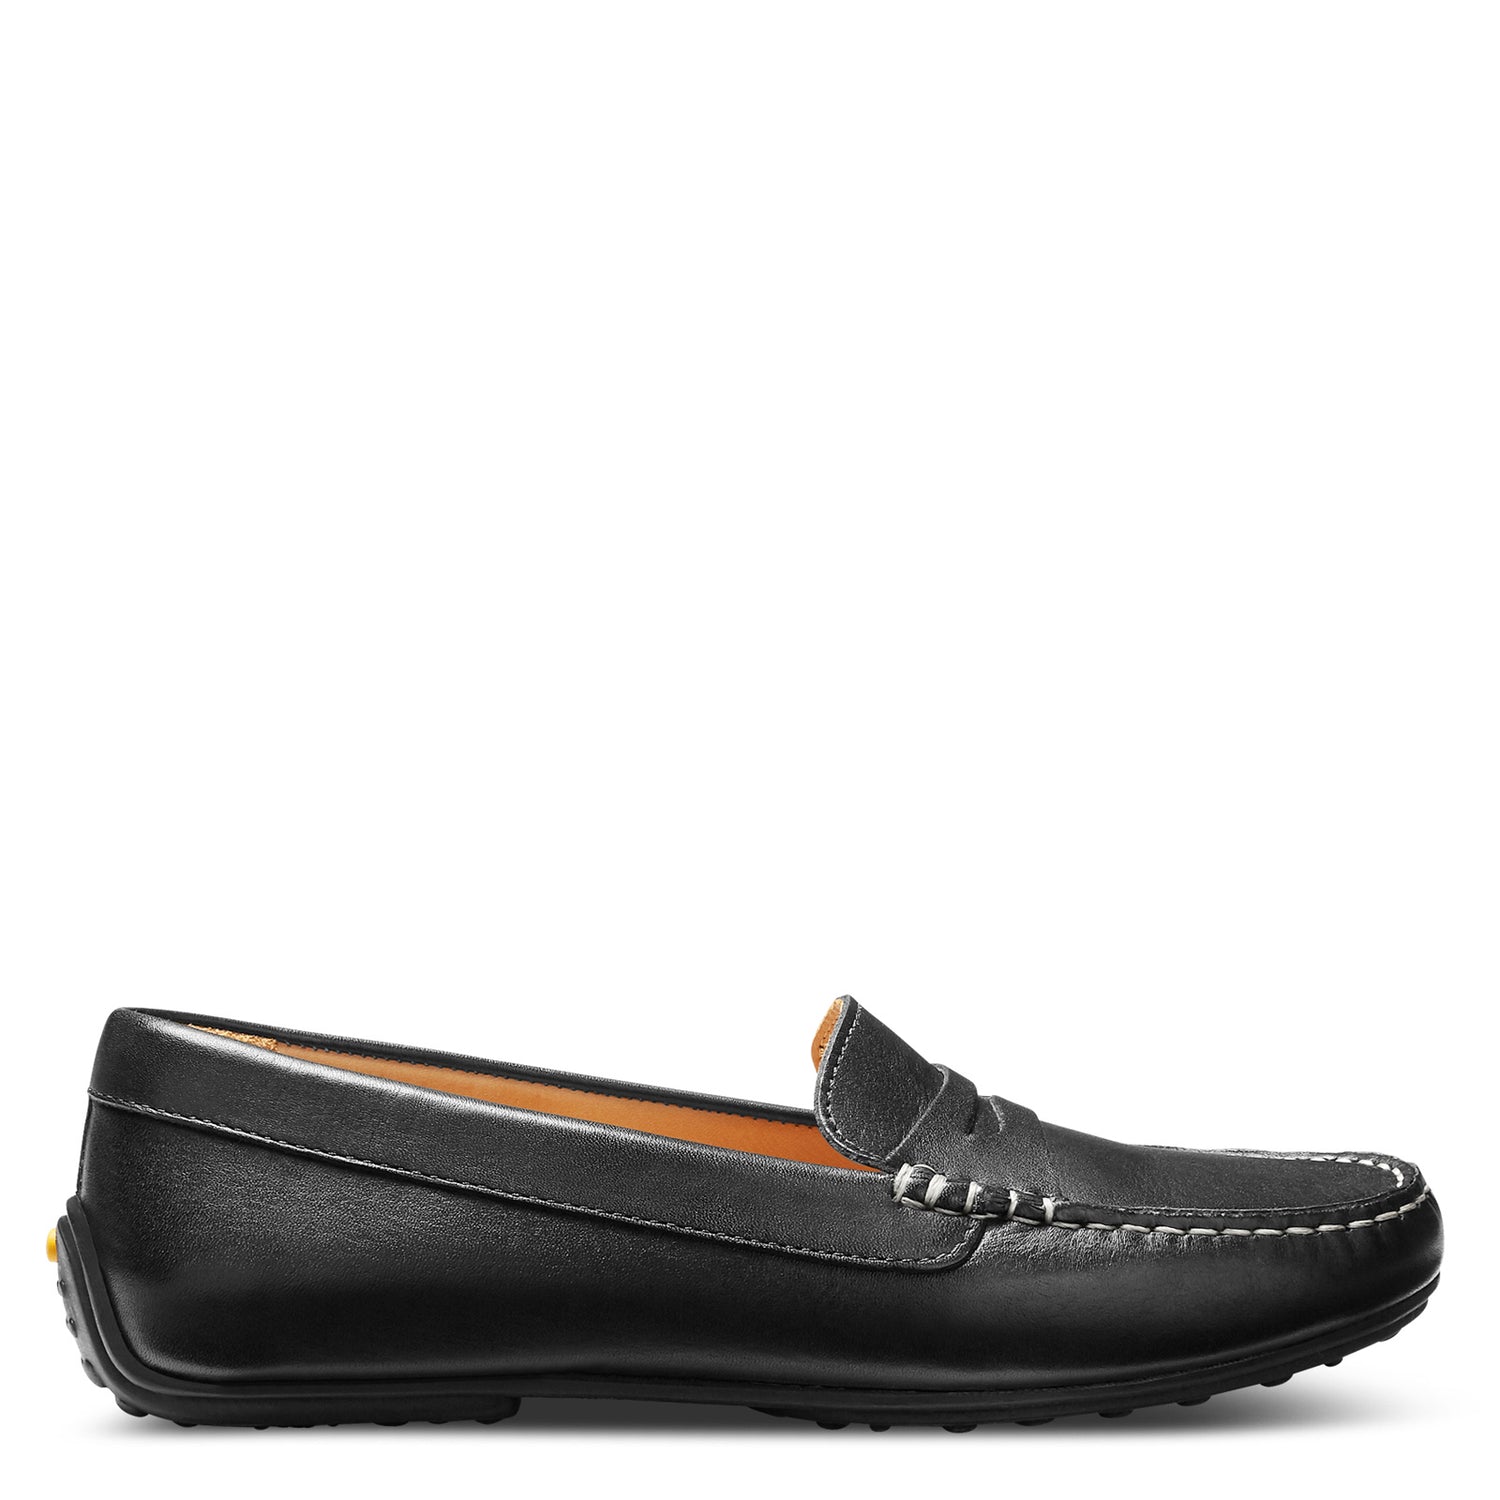 Peltz Shoes  Women's Samuel Hubbard Free Spirit Slip-On BLACK LEATHER W2111-409